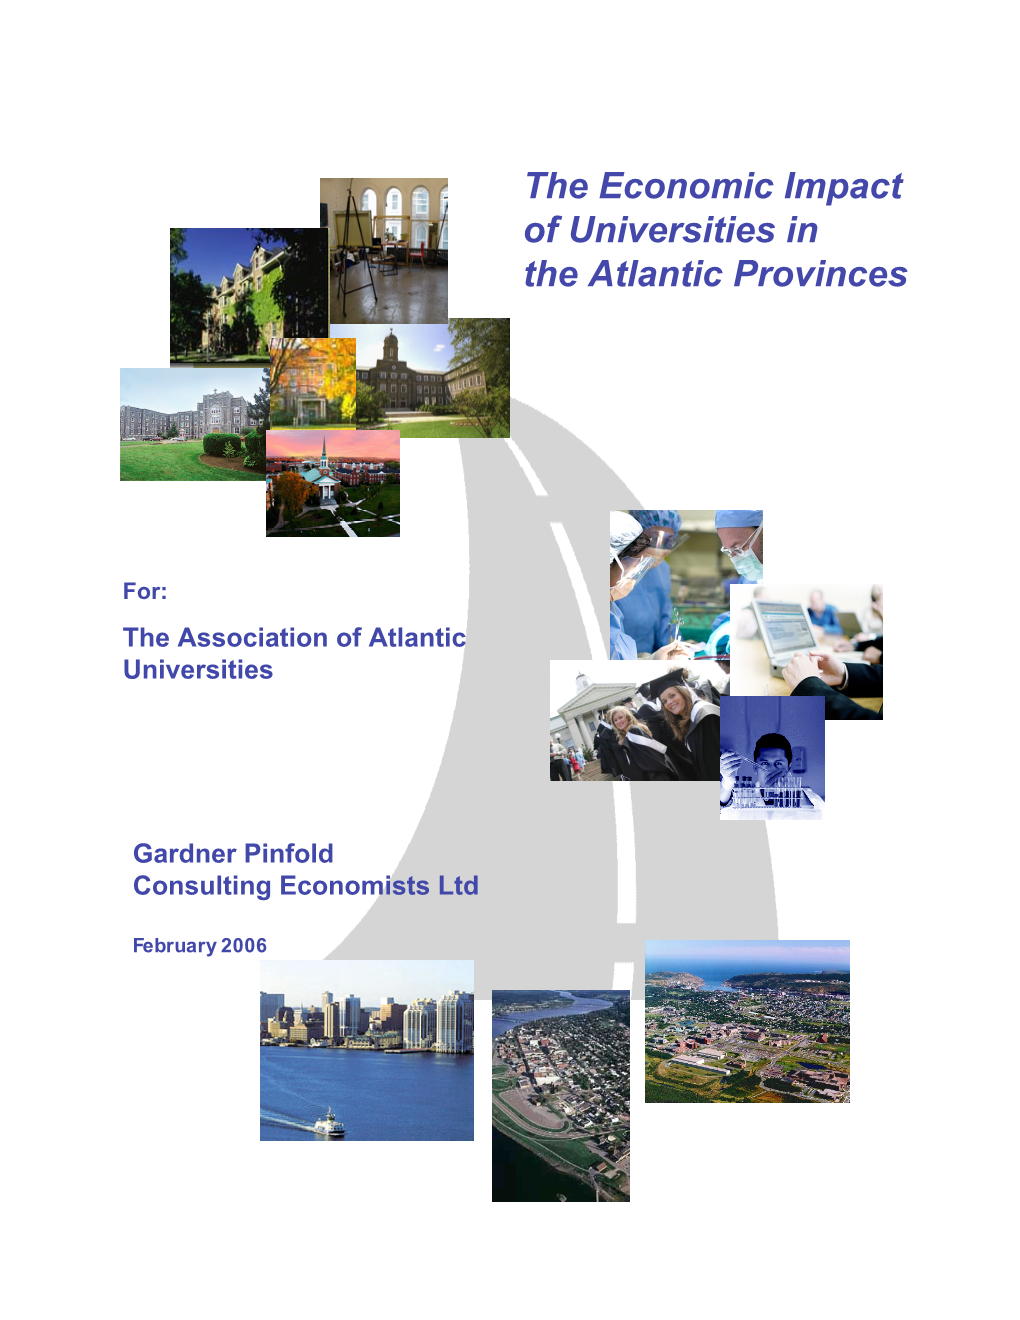 The Economic Impact of Universities in the Atlantic Provinces